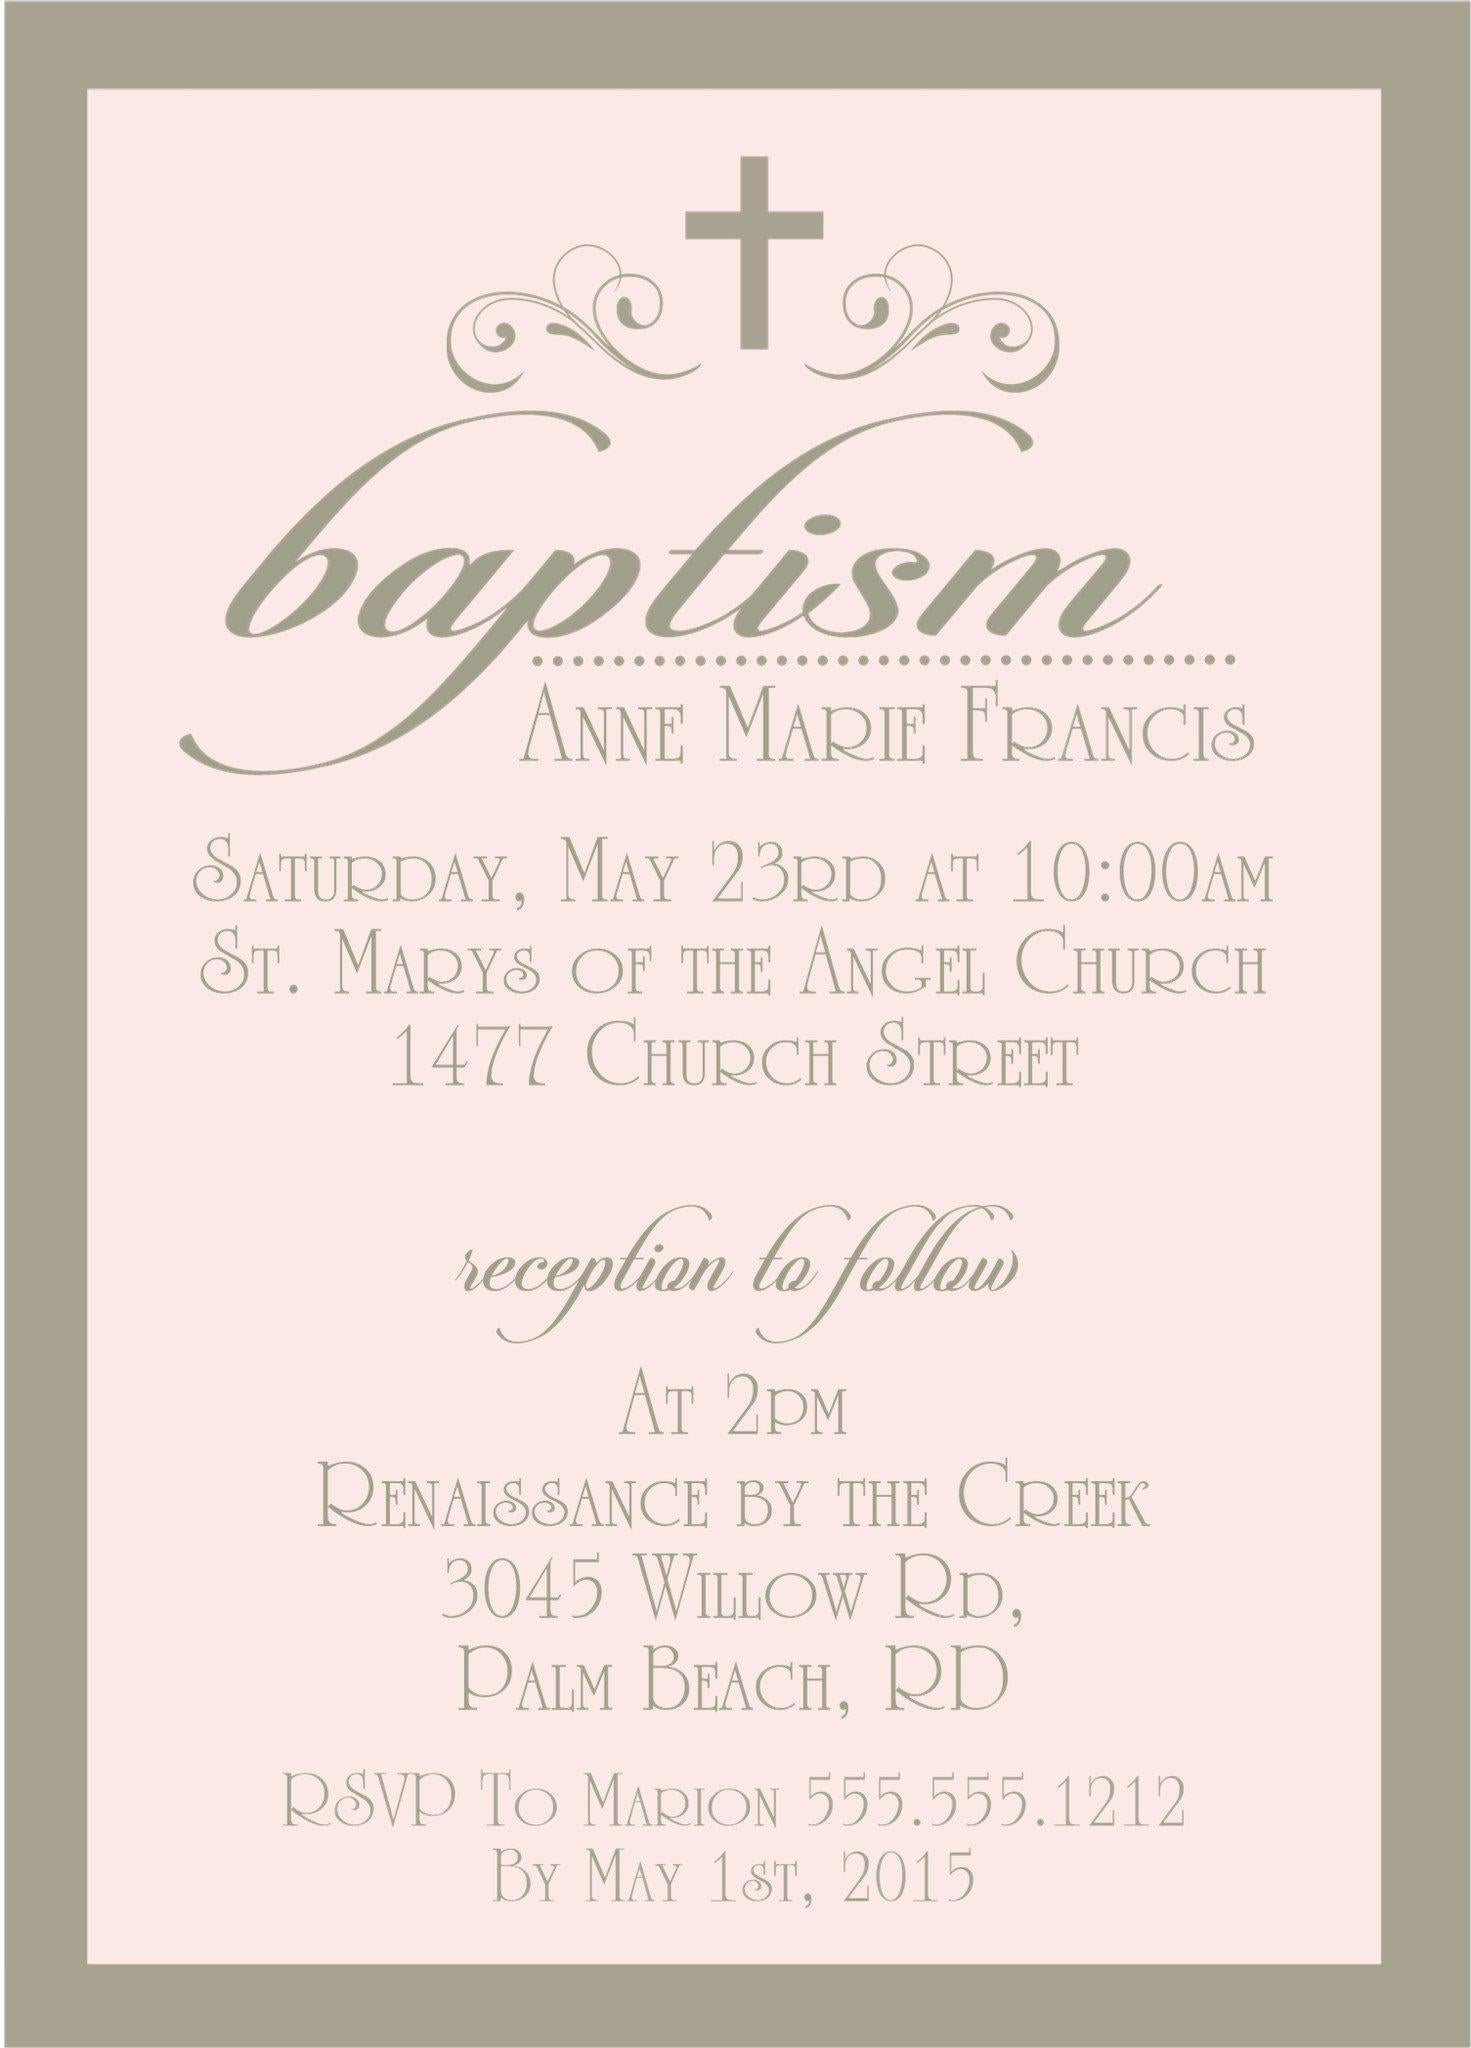 Pink And Grey Baptism Invitations